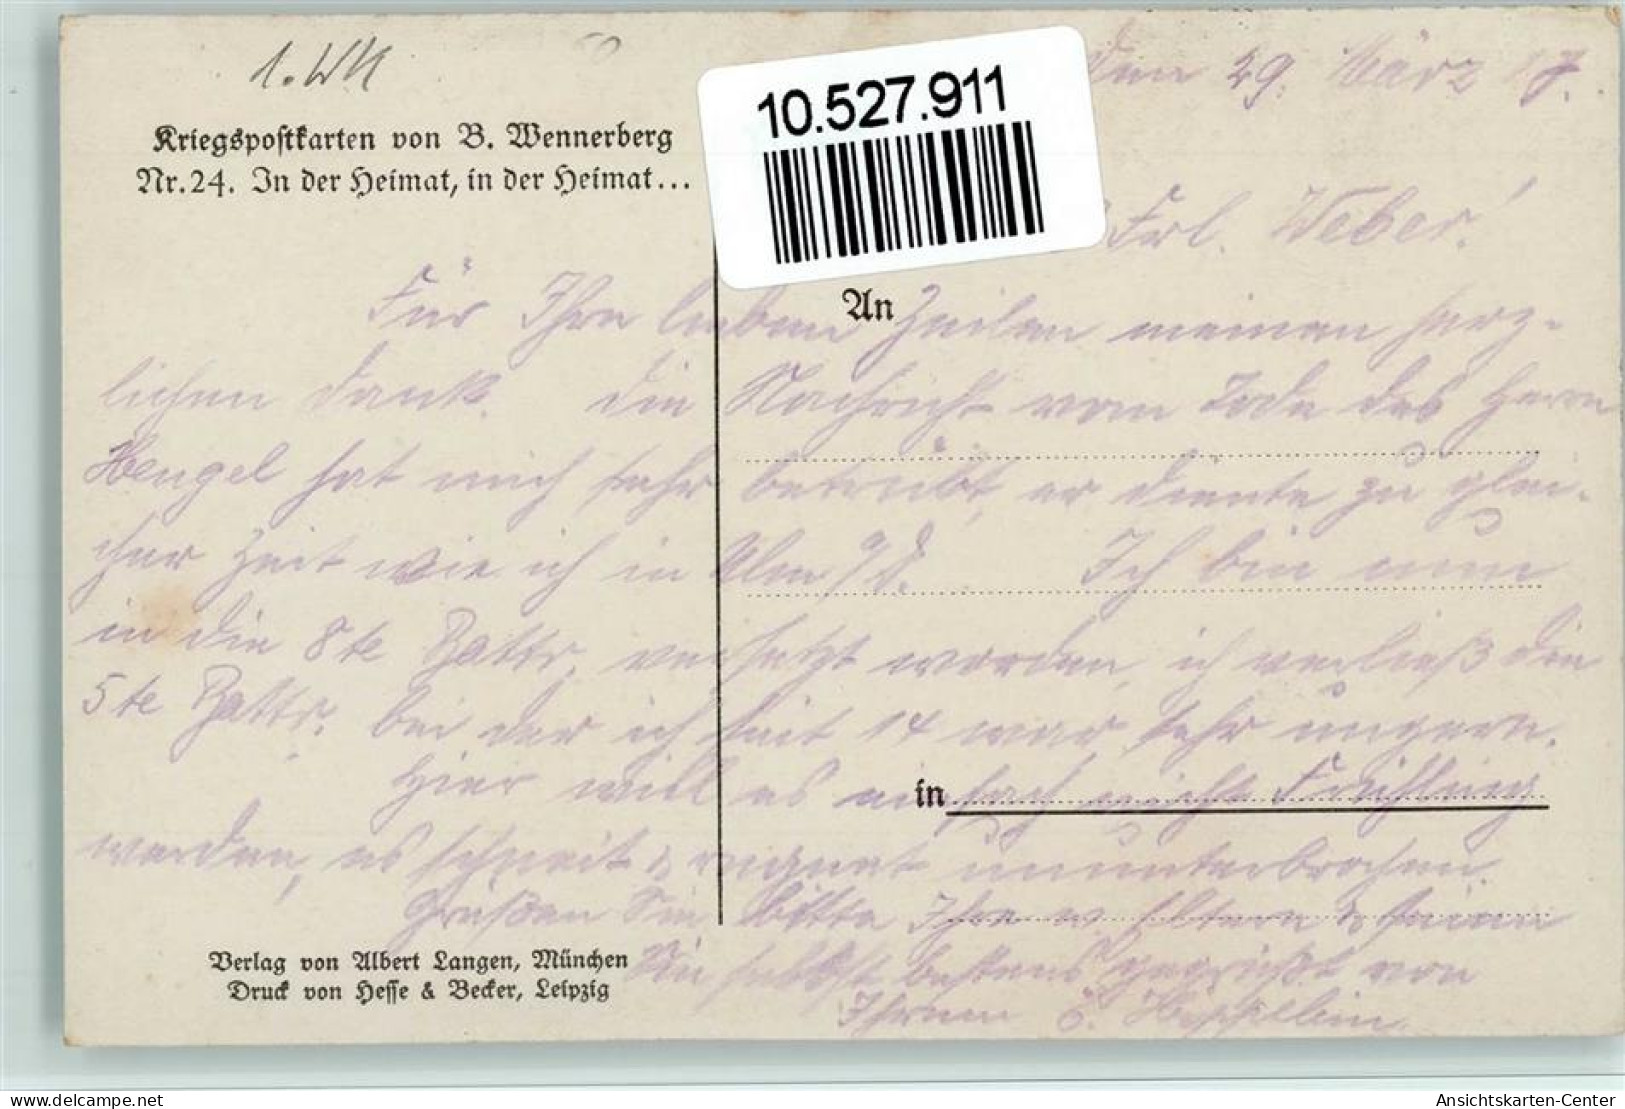 10527911 - Wennerberg, Brynolf Kriegspostkarten Nr. 24 - Wennerberg, B.